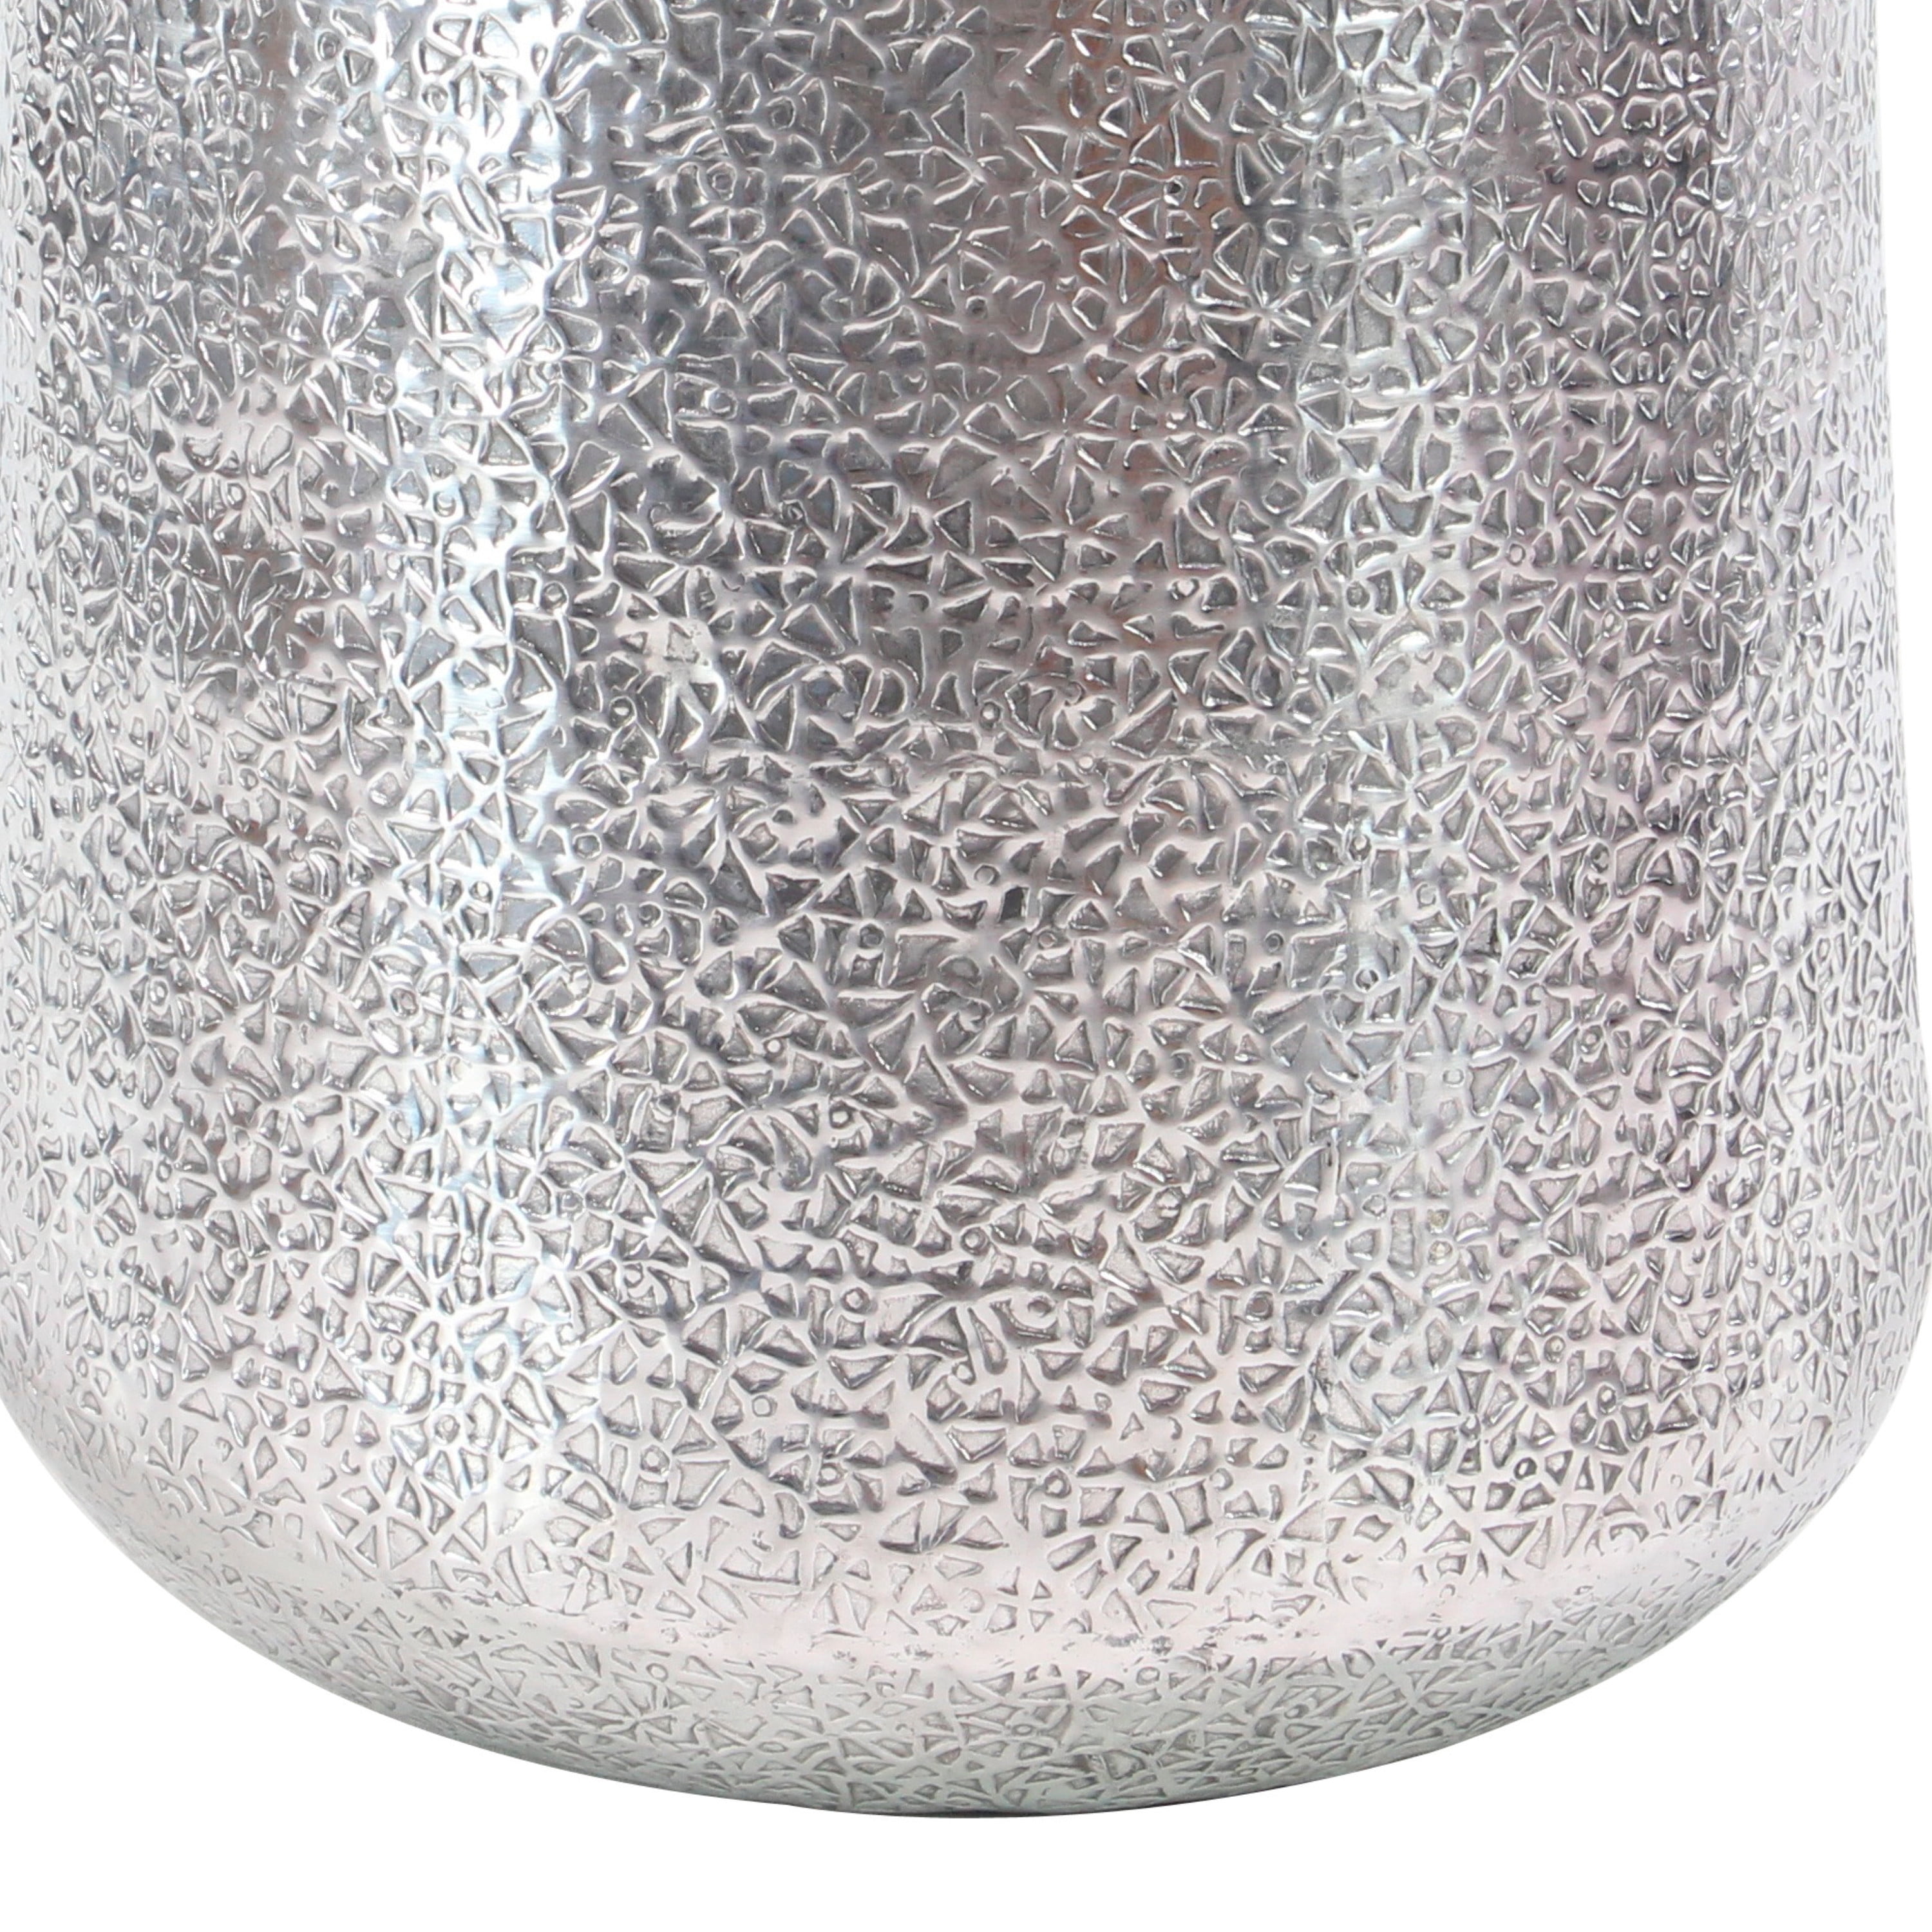 5 & 6 Inch Hammered Silver Aluminum Tone Metal Plant Pot